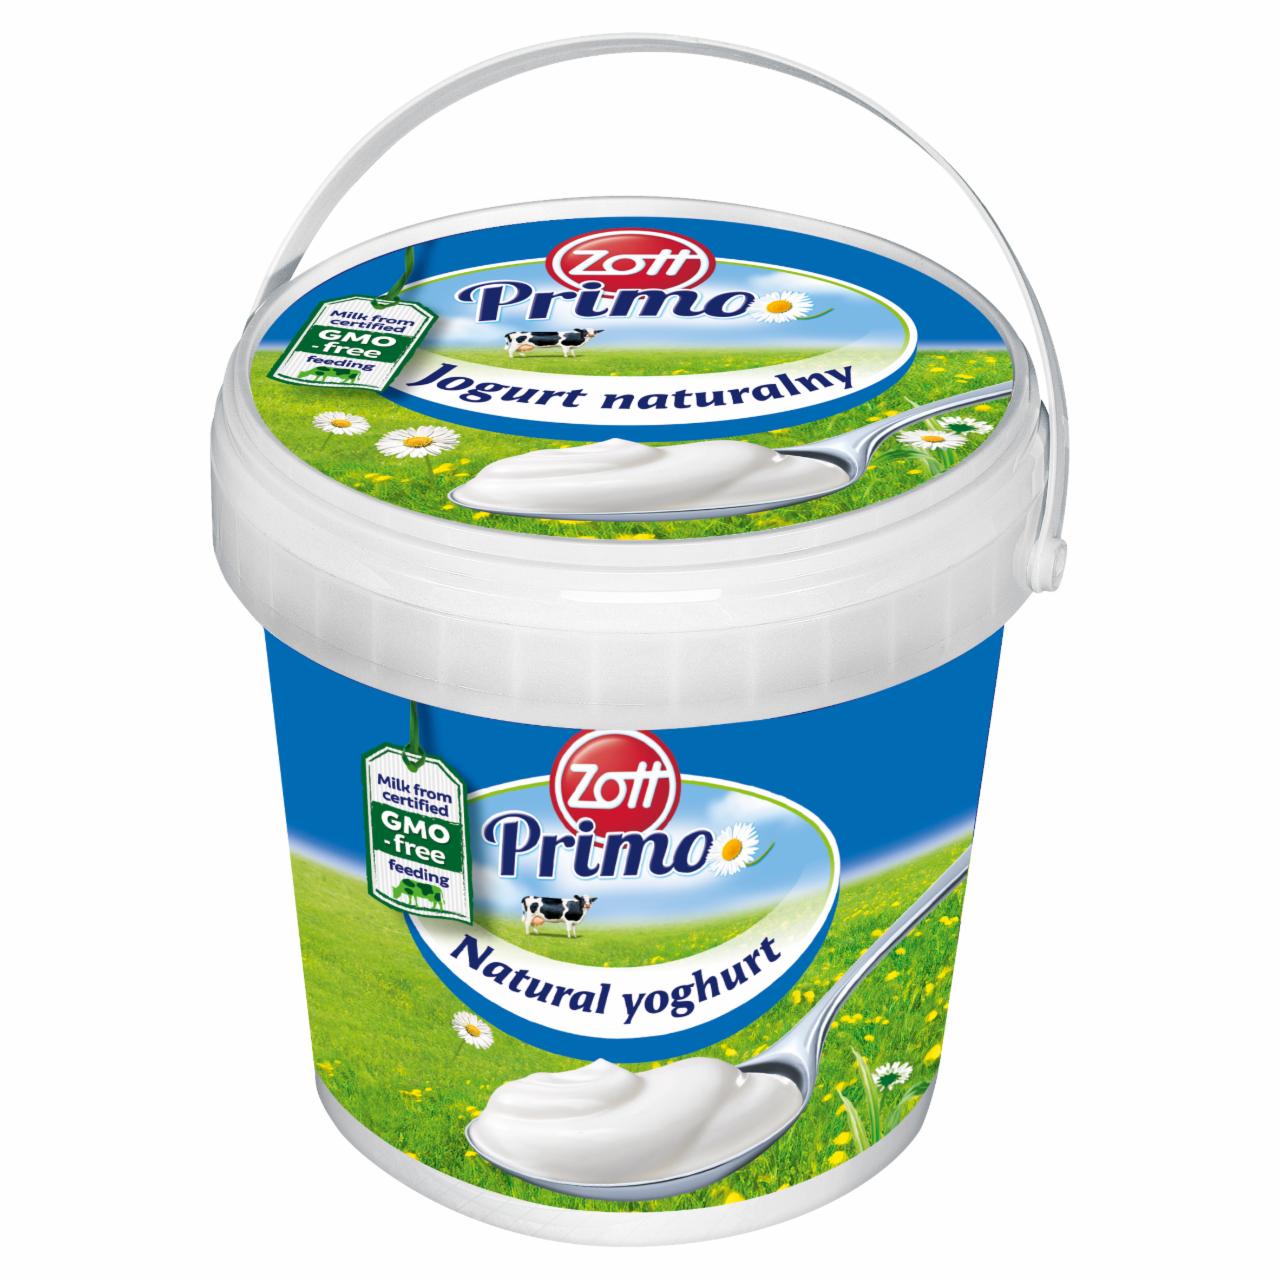 Zdjęcia - Zott Primo Jogurt naturalny 1 kg